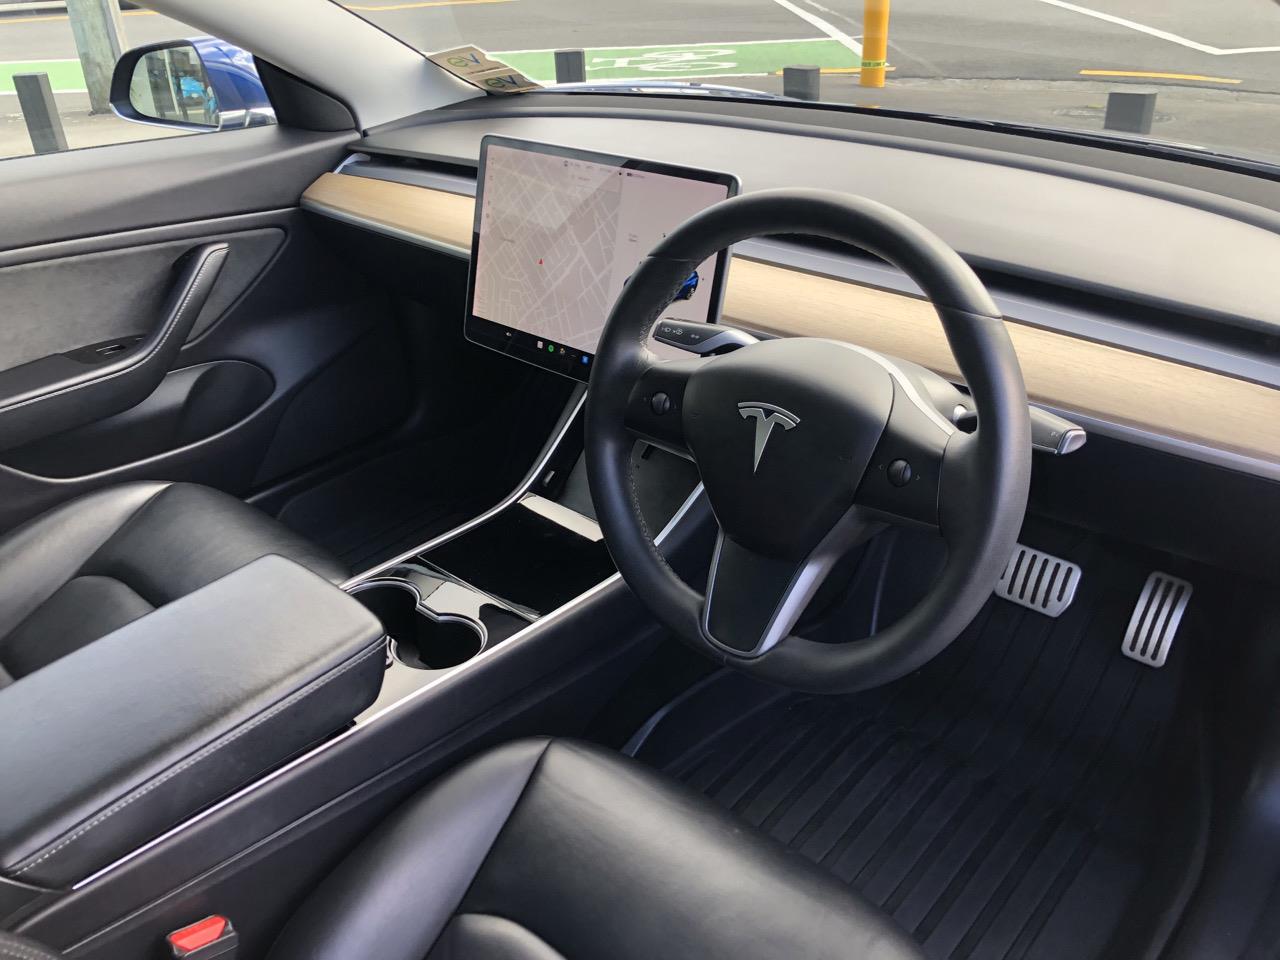 2019 Tesla Model 3